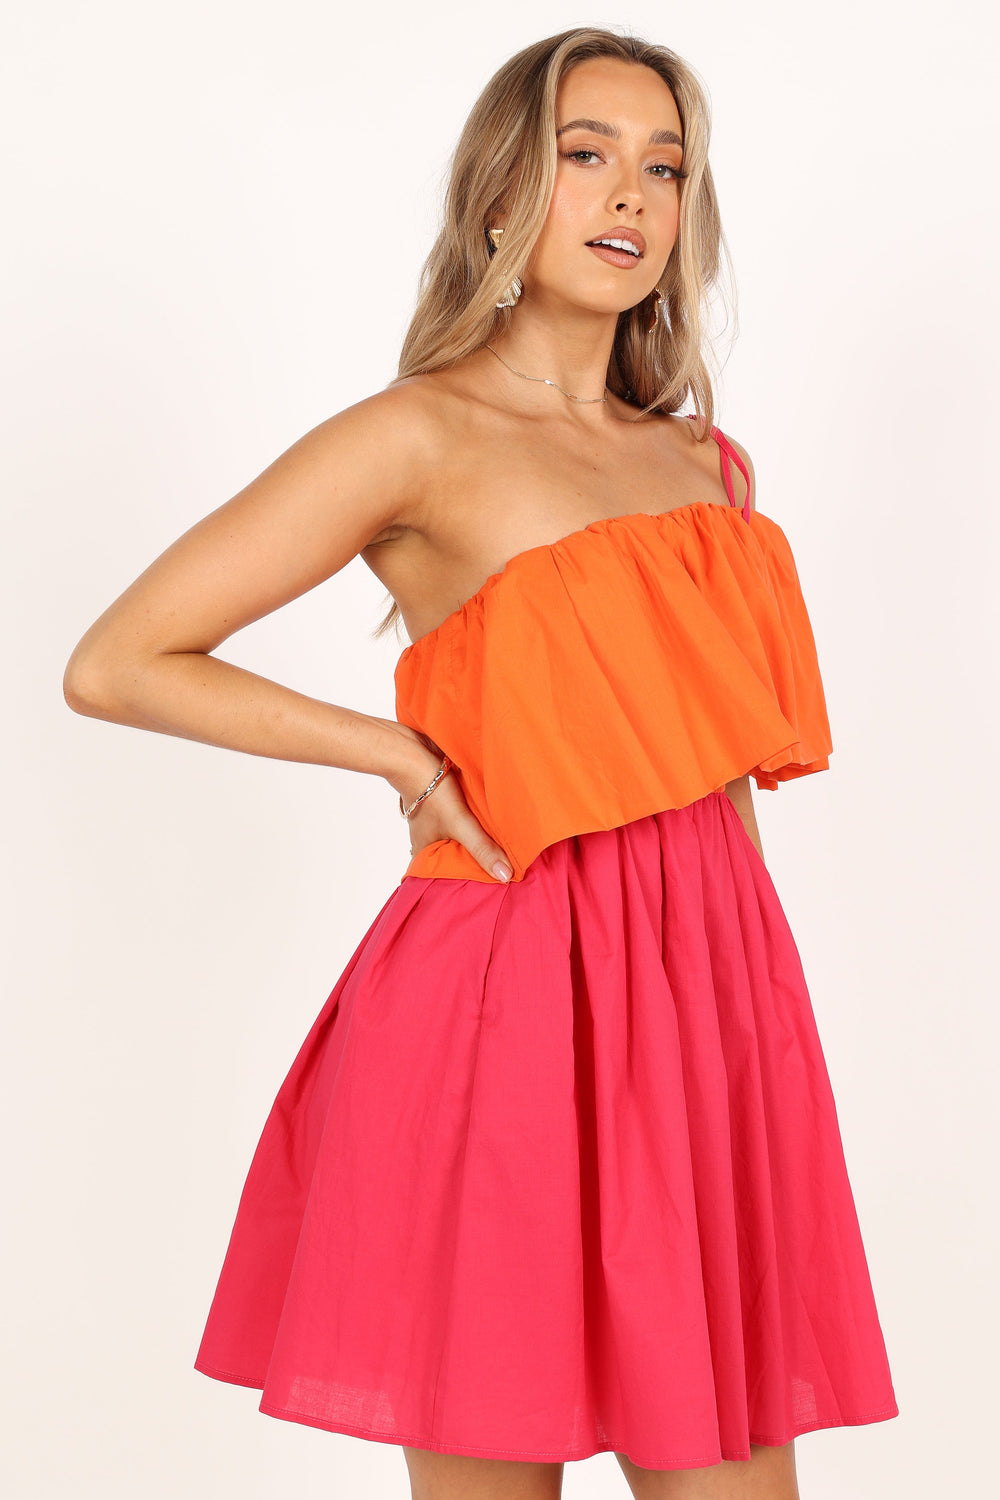 Maeva - - & Petal USA Shoulder One Pup Pink/Orange Dress Mini